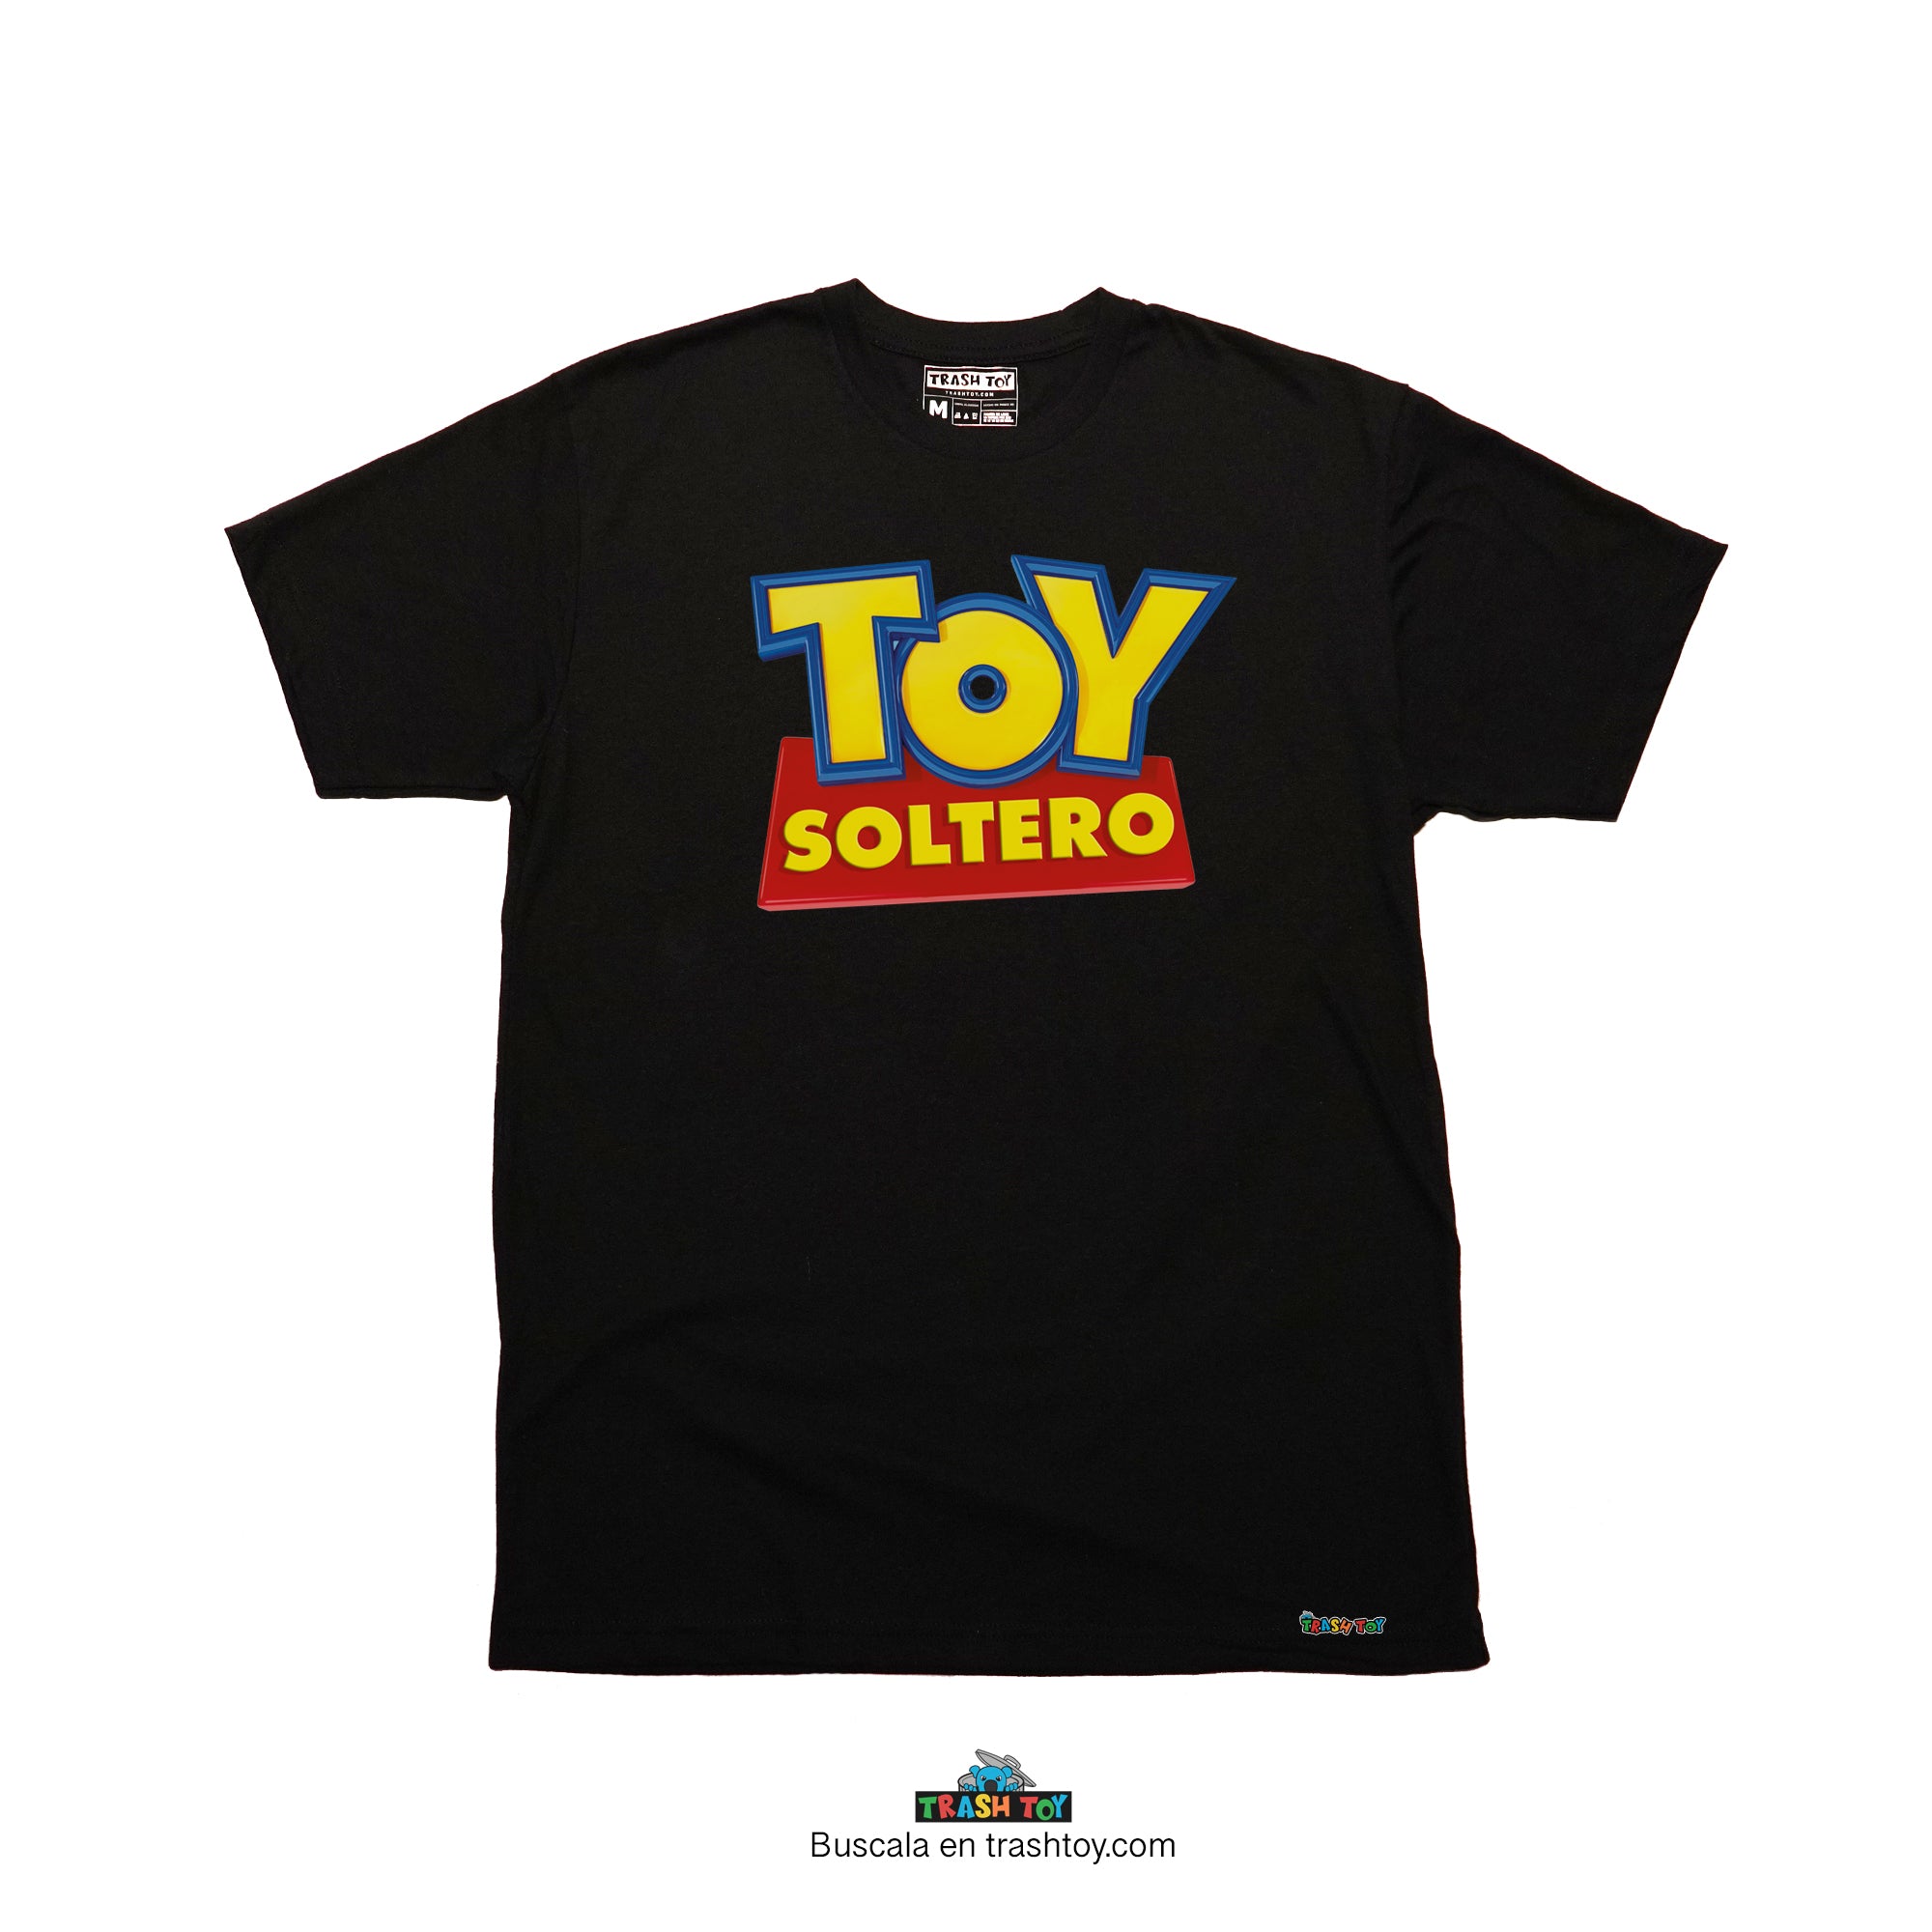 Toy Soltero